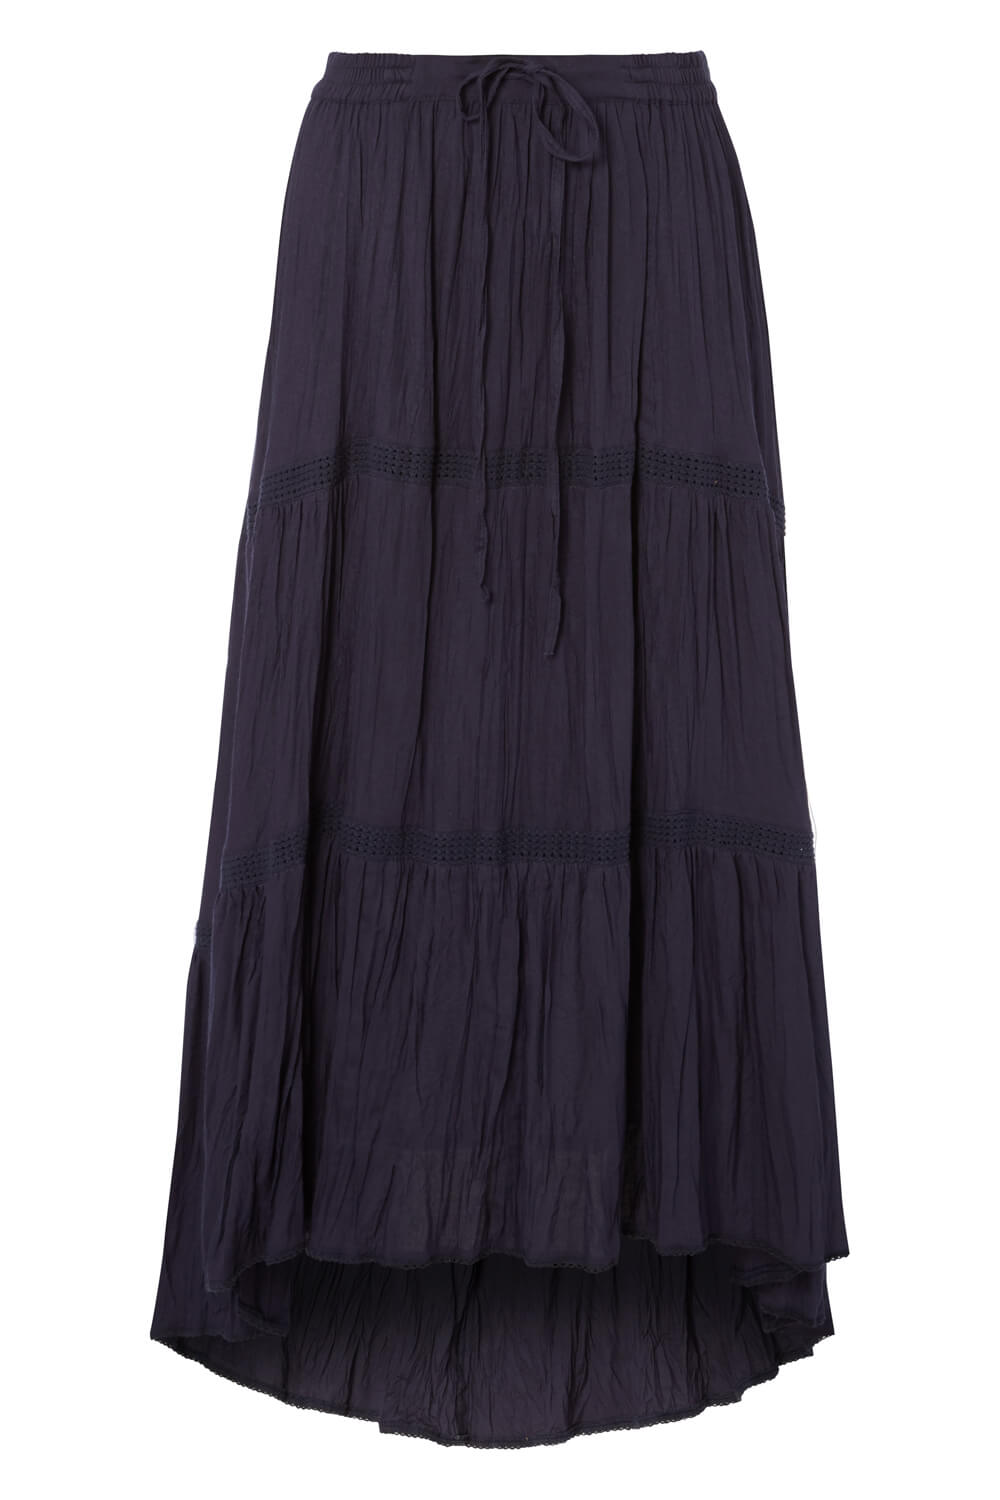 Asymmetric High Low Hem Skirt in Blue - Roman Originals UK